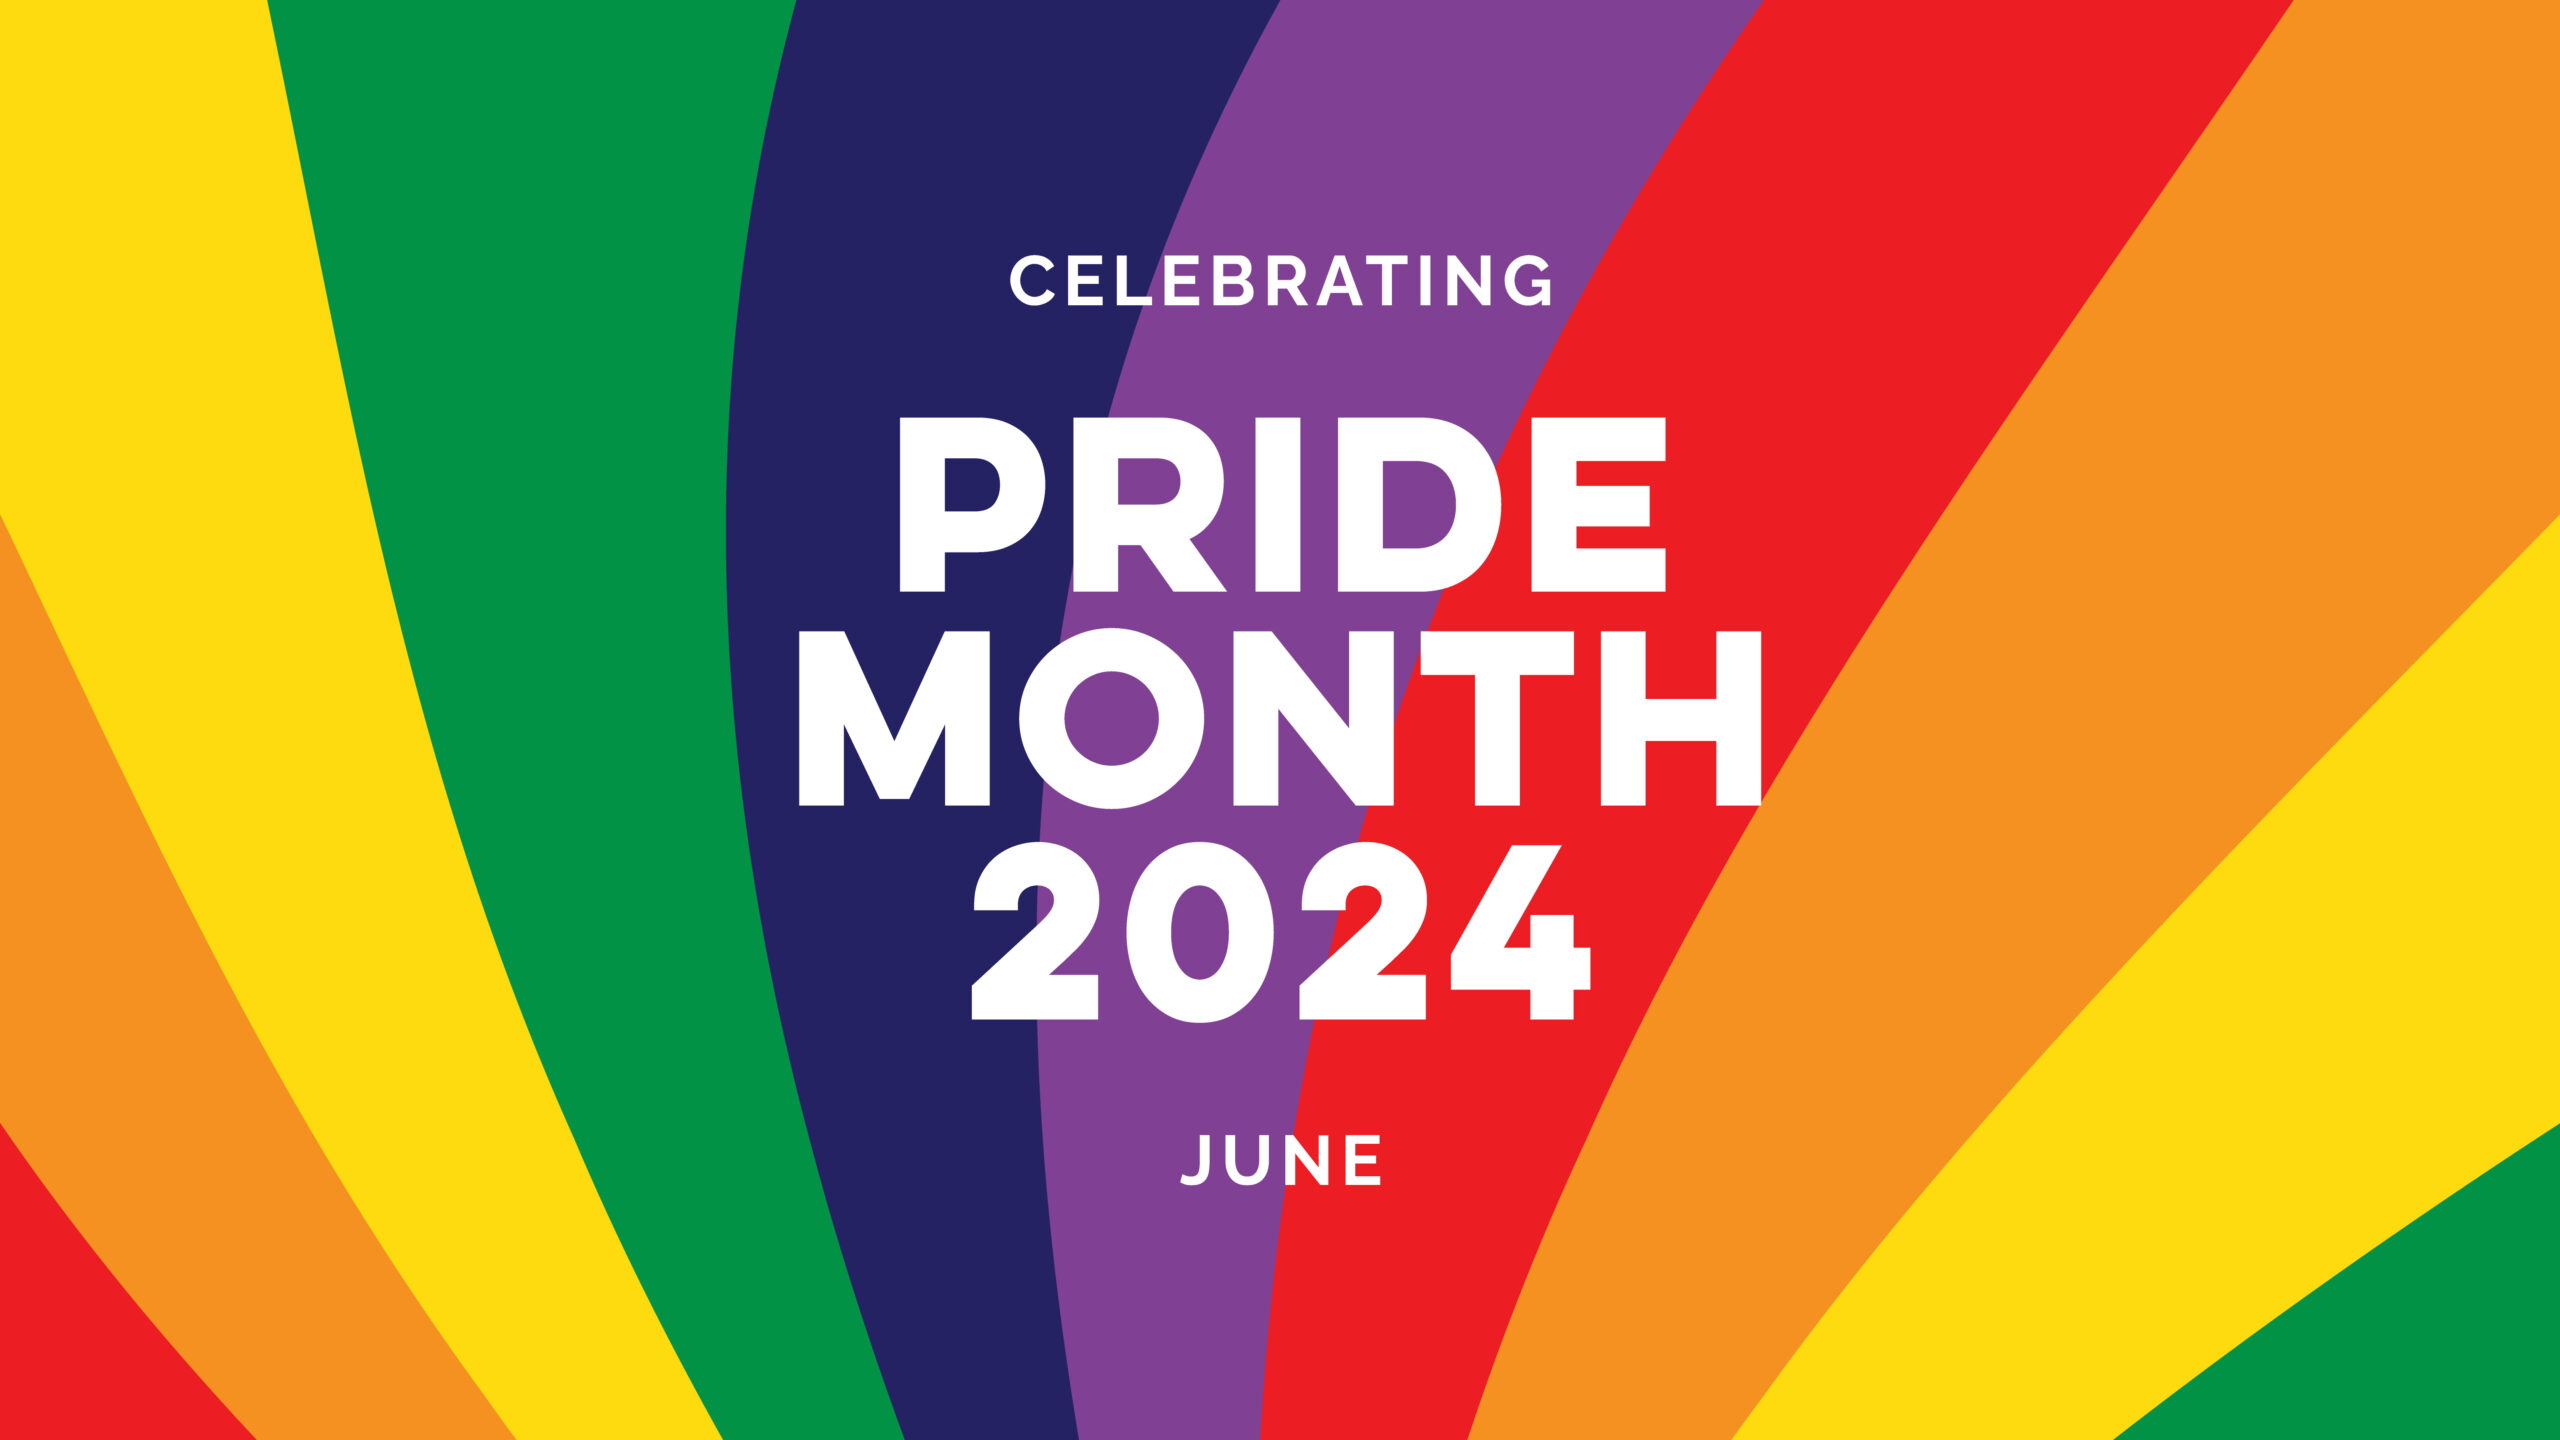 celebrating pride month 2024 June on rainbow backdrop